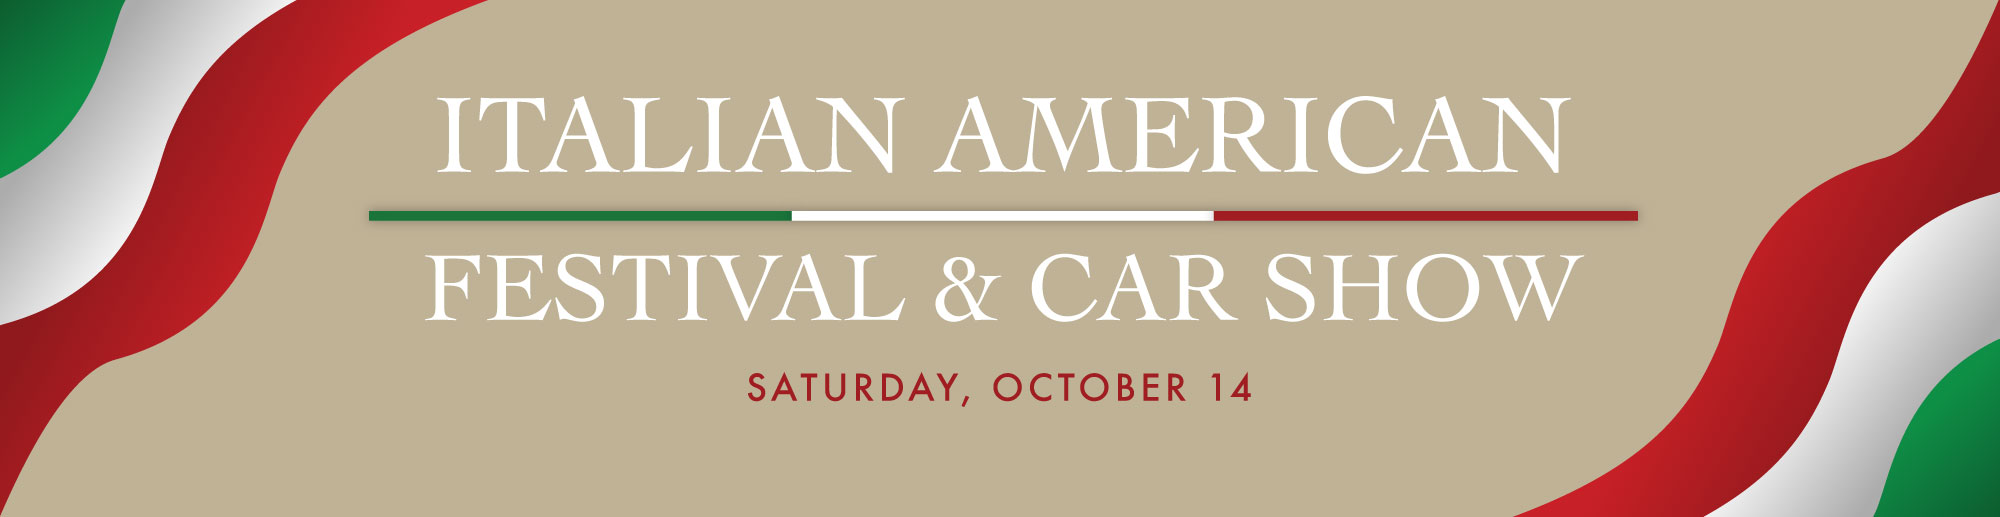 Italian American Festival & Car Show